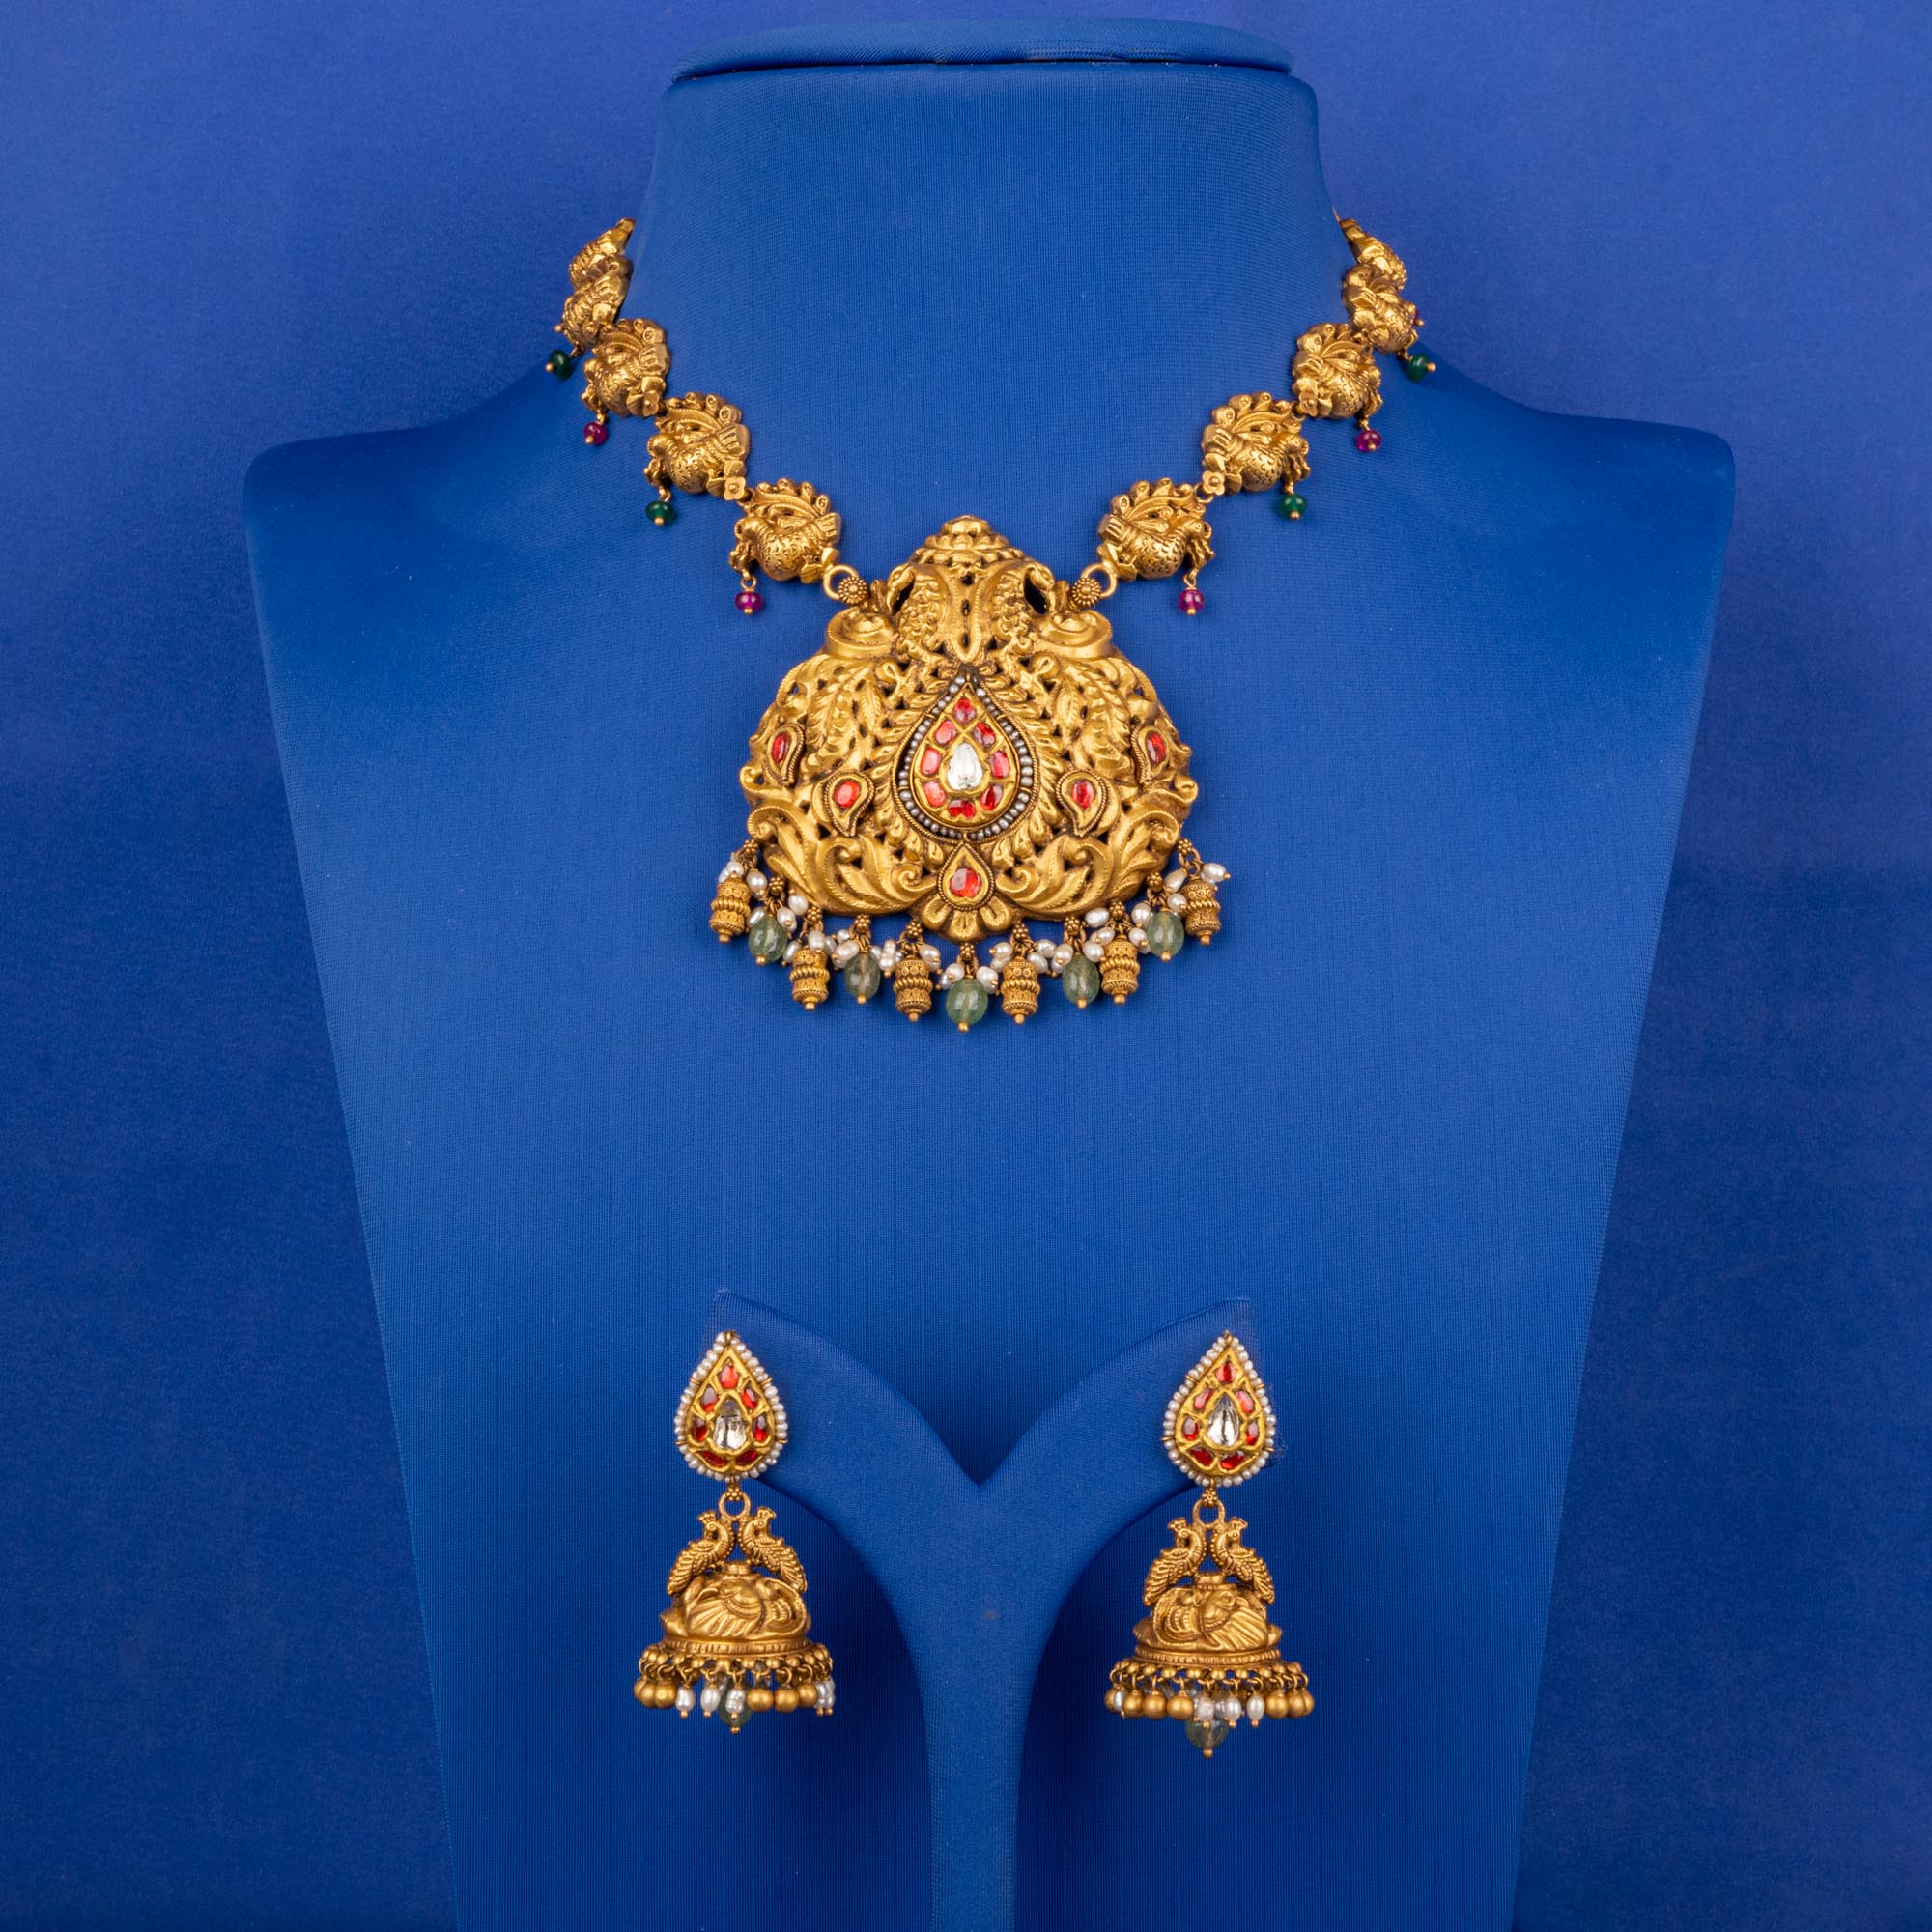 Enchanting Heirloom: Handmade 22k 'Antique' Polki Diamond Necklace and Earrings Set